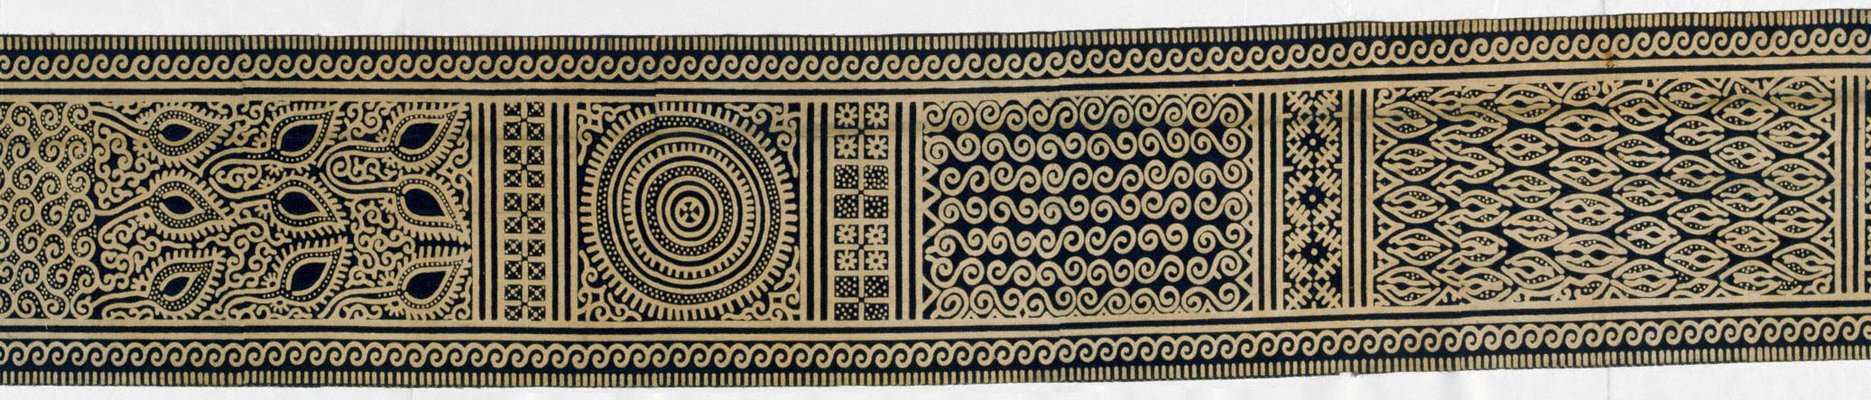 Alternate image of Sacred heirloom banner (sarita) by 